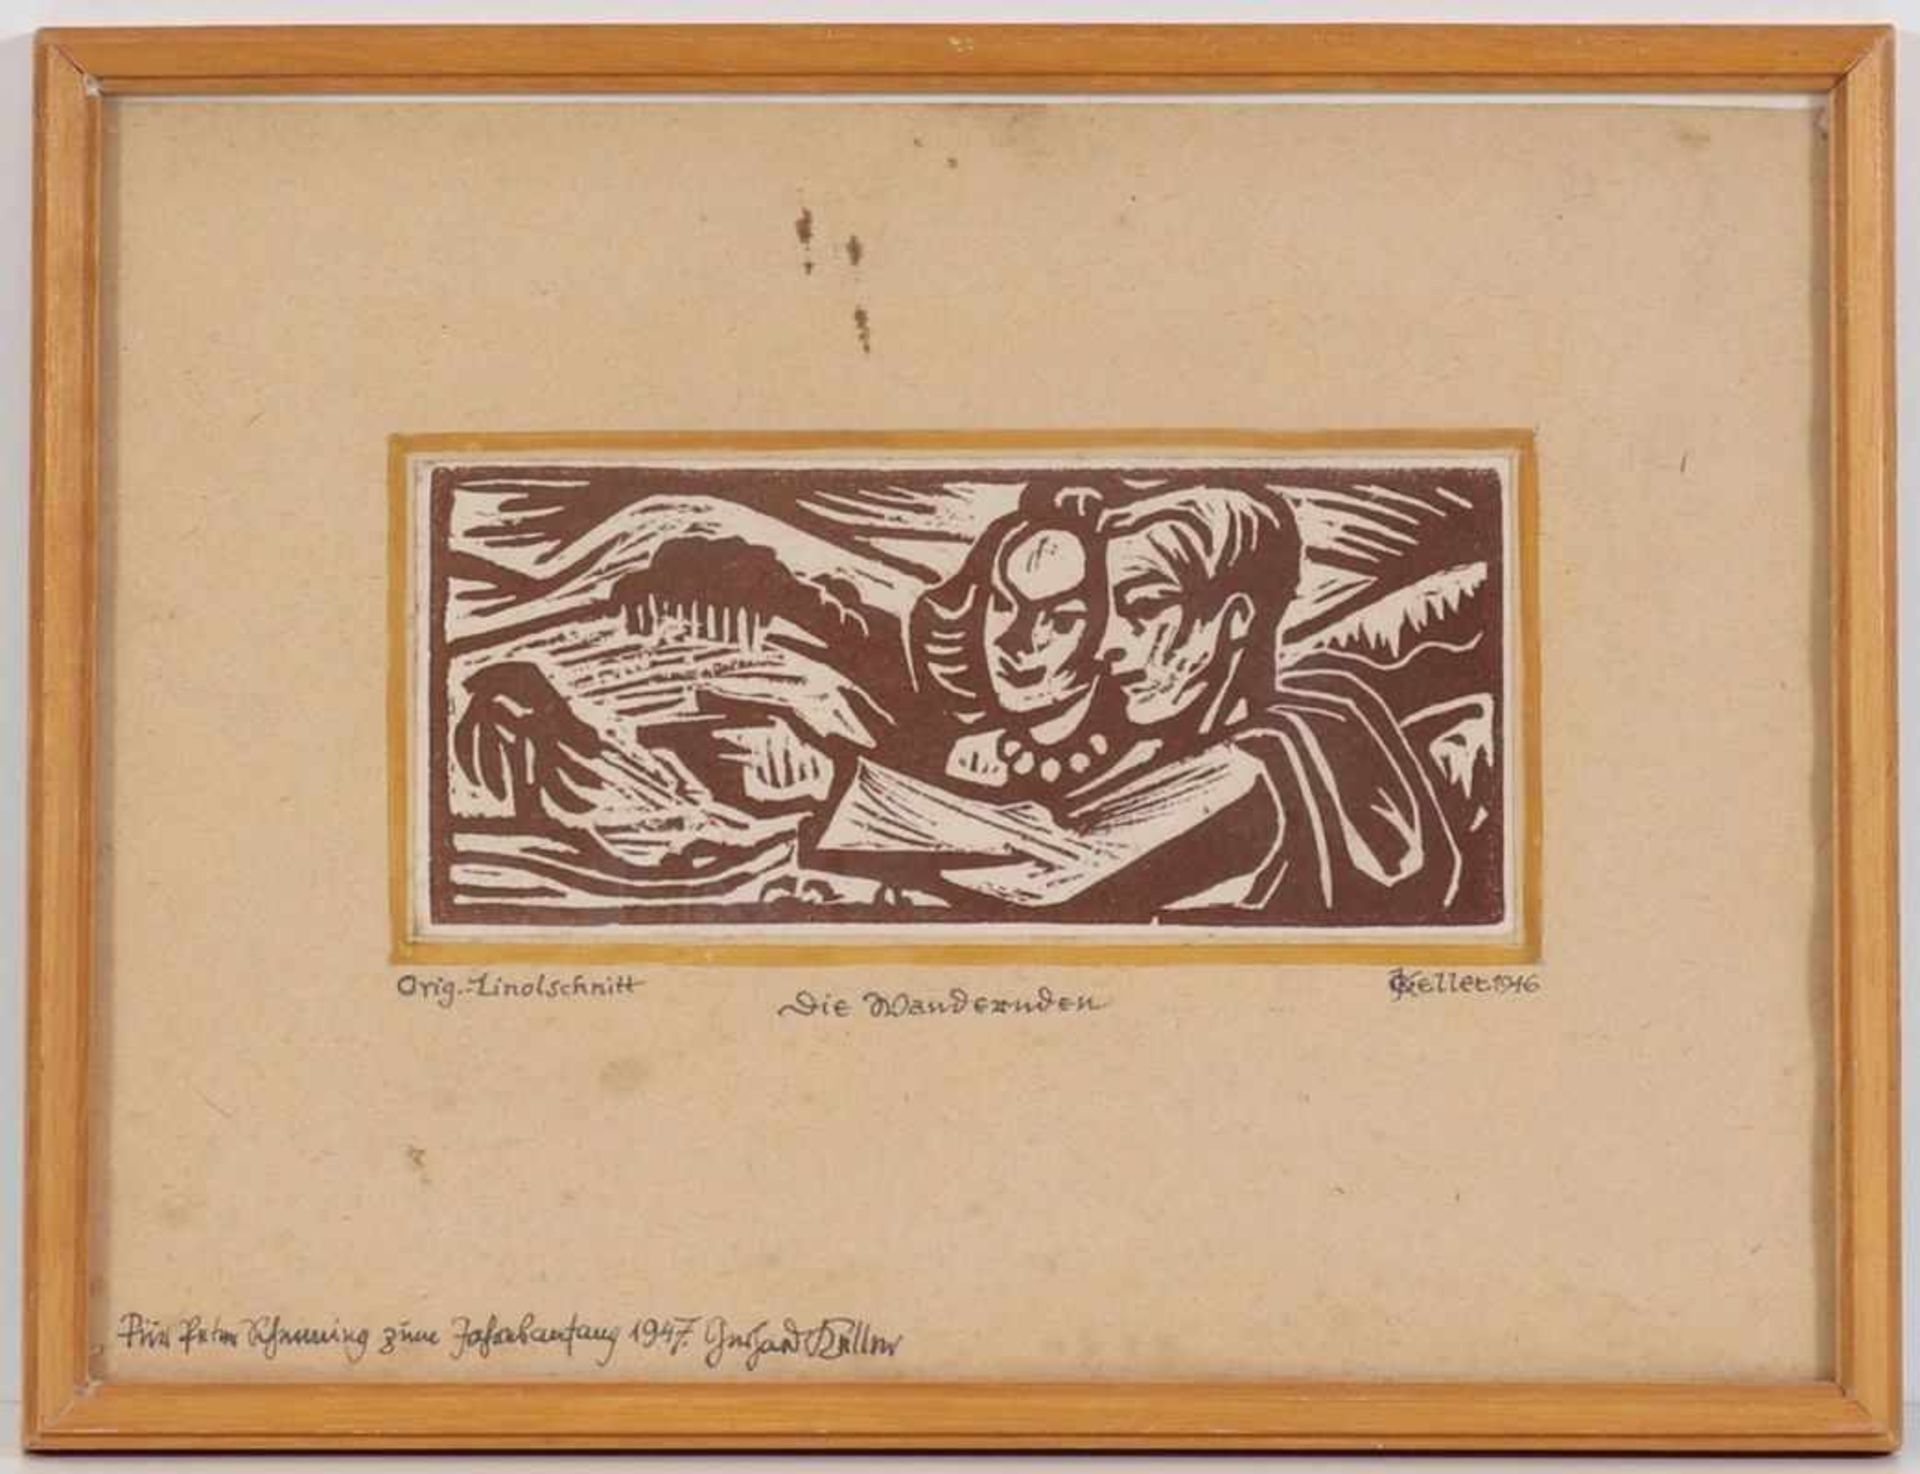 Gerhard Keller1905 - 1984 - "Die Wandernden" - Linolschnitt/Papier. 5,5 x 12,4 cm (